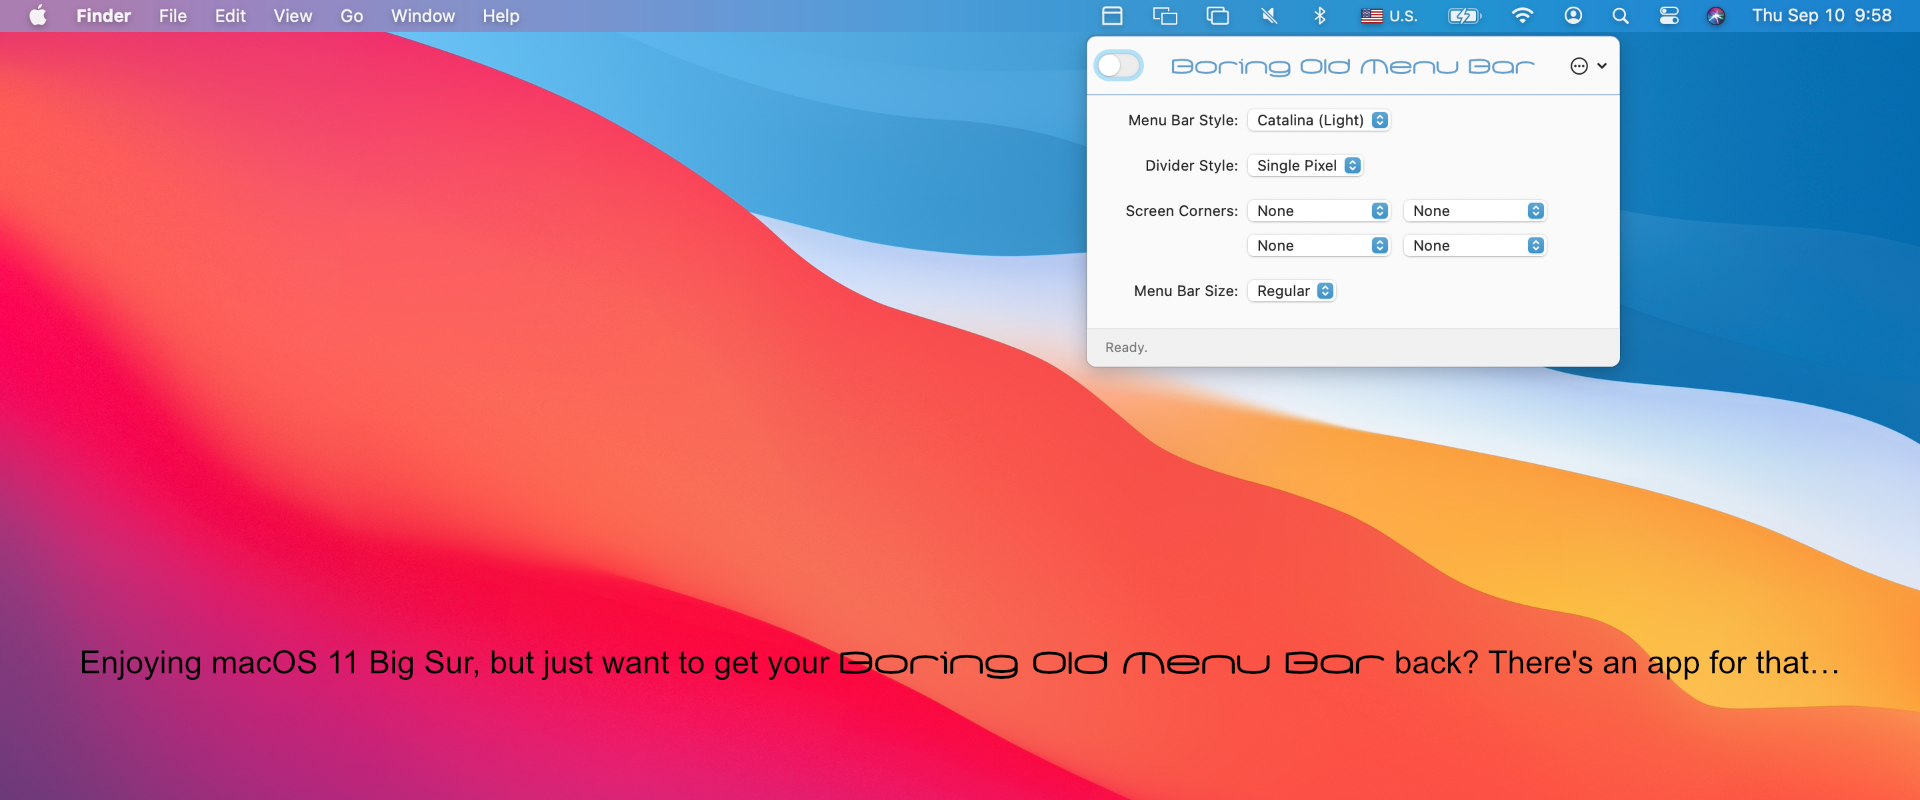 Boring Old Menu Bar 1.6 Mac 破解版 Big Sur菜单栏优化工具